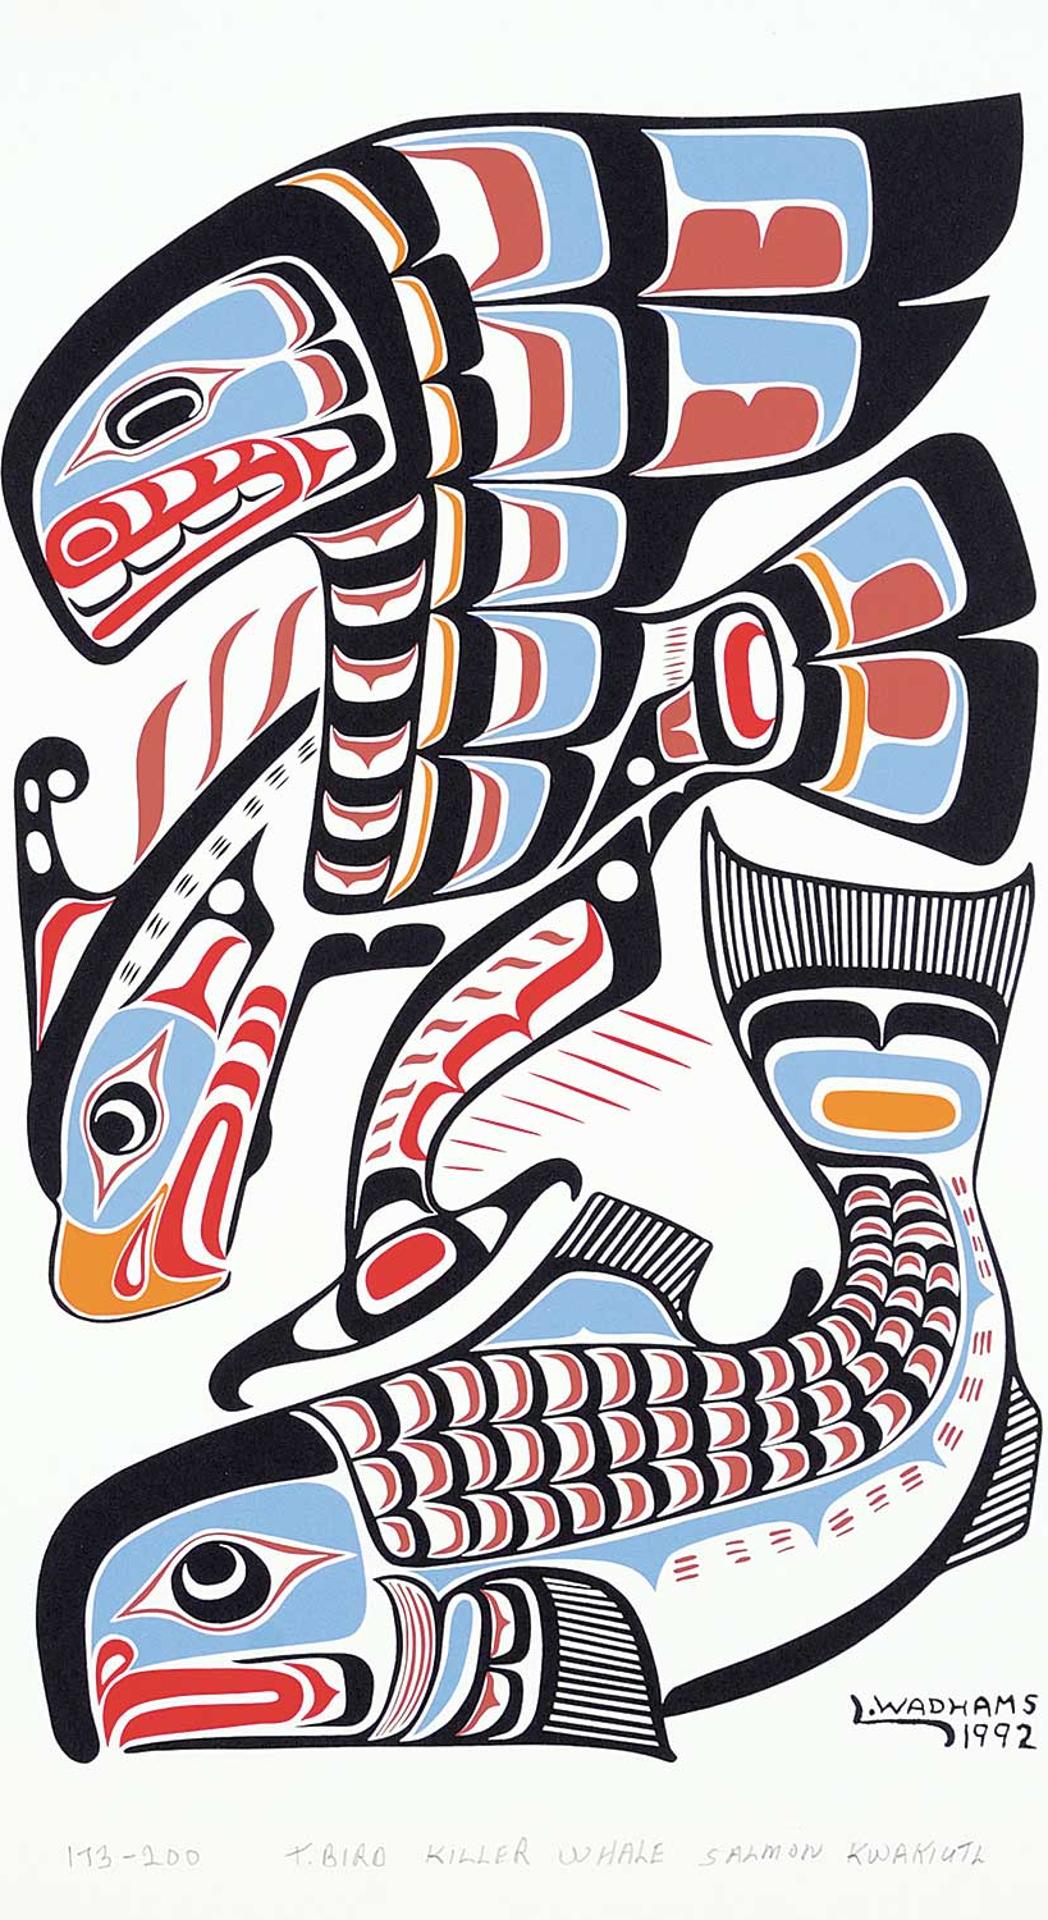 Lloyd Wadhams - T. Bird Killer Whale Salmon Kwakiutl  #173/200